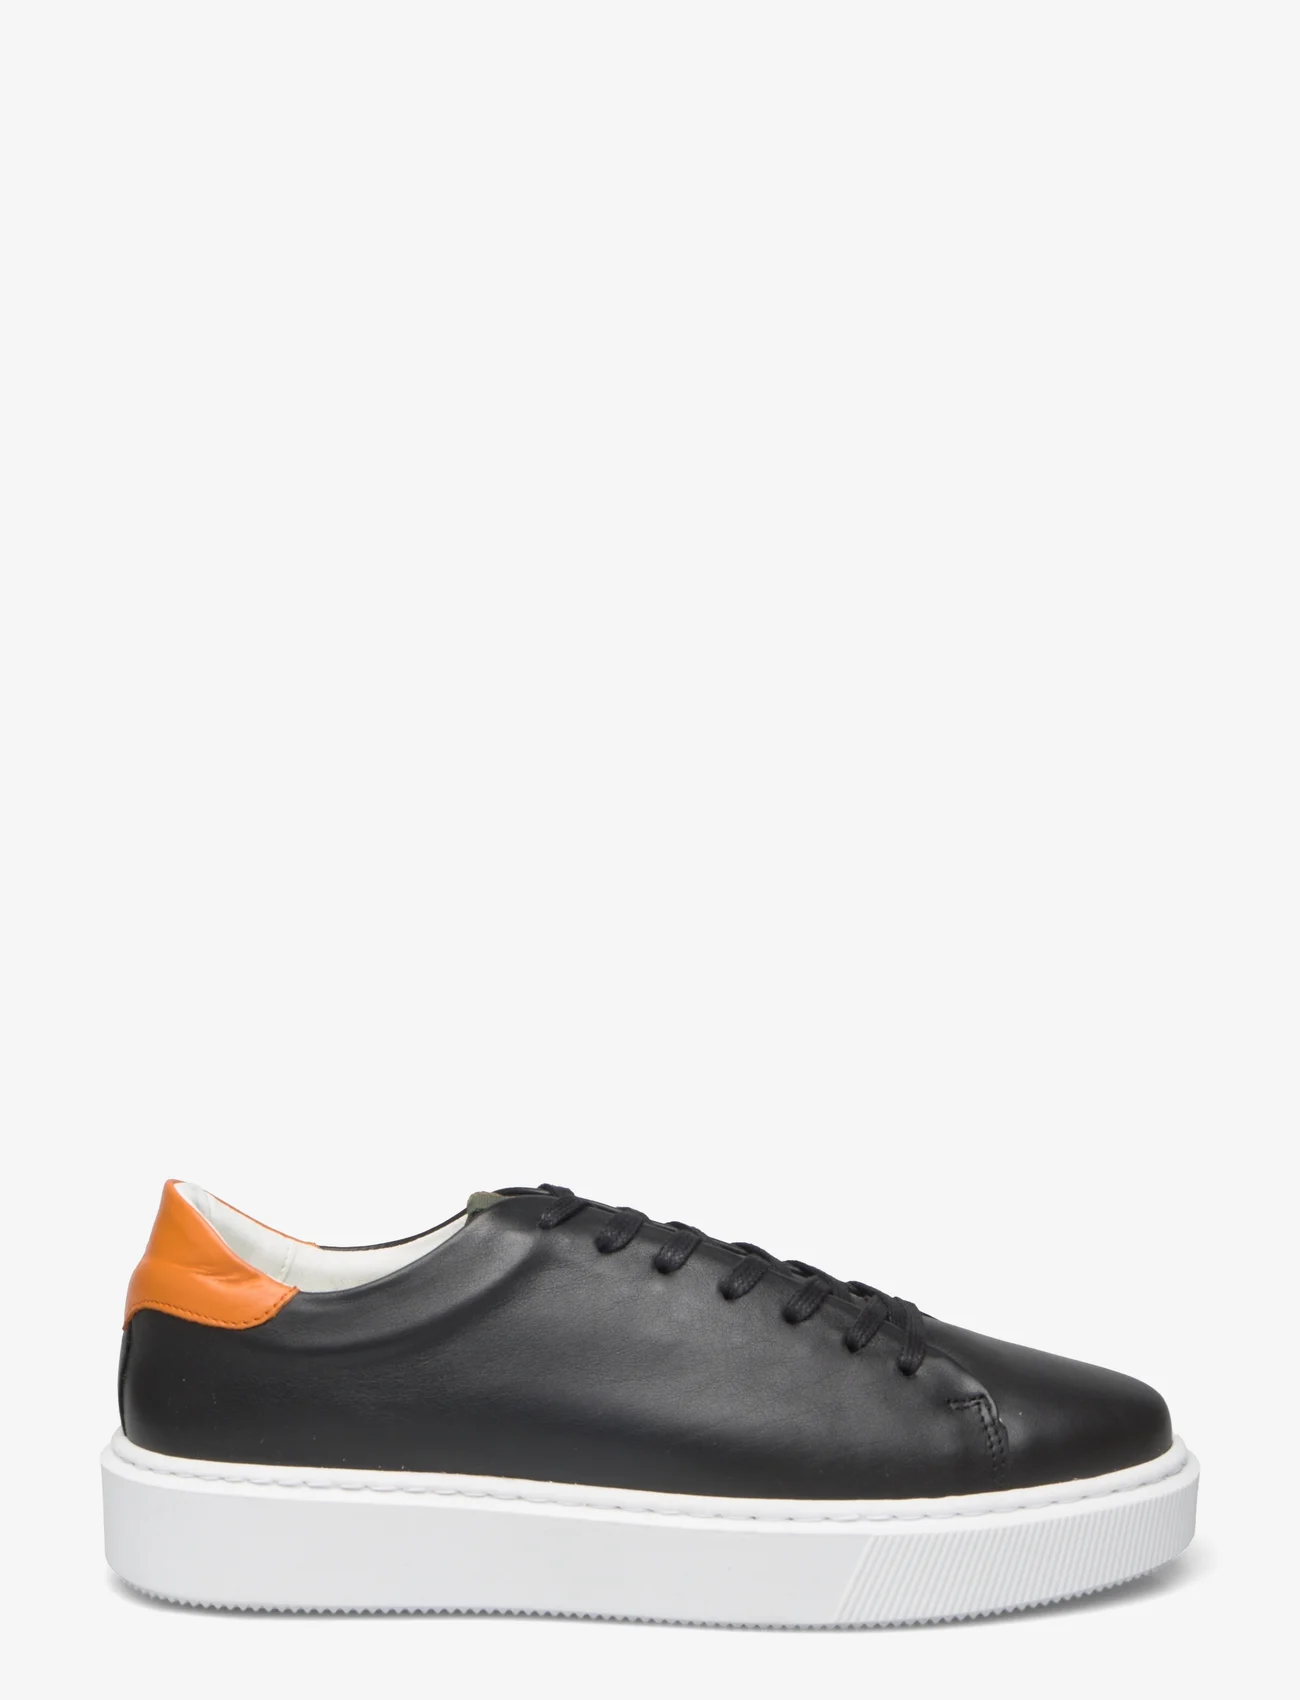 Playboy Footwear - Alex 2.0 - låga sneakers - black leather/orange - 1